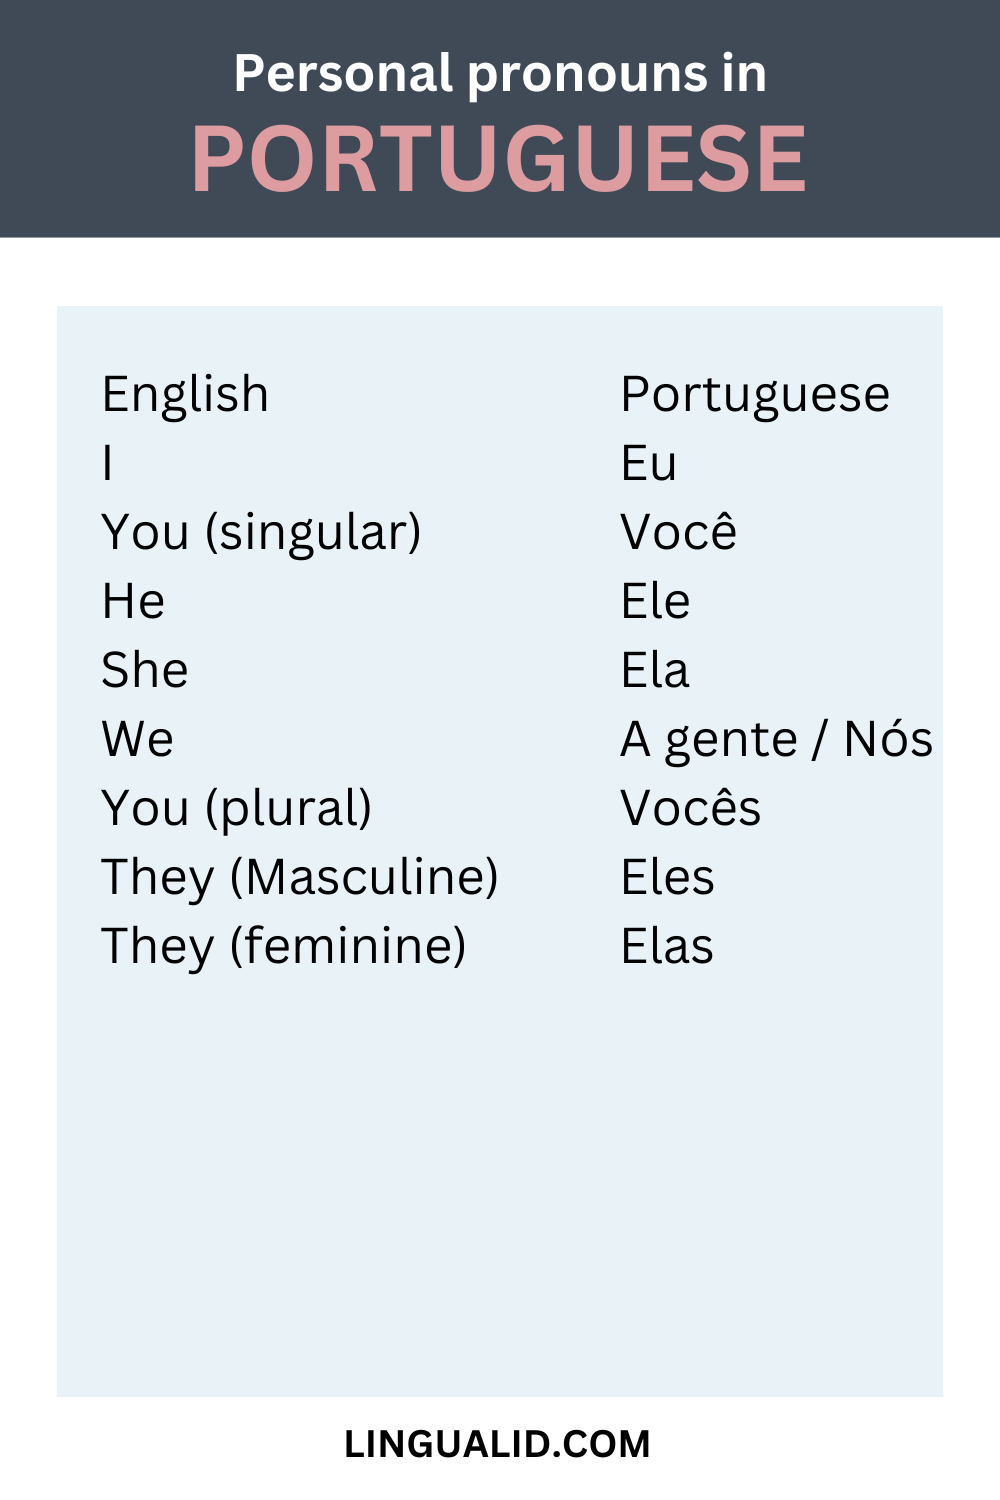 Portuguese Personal Pronouns